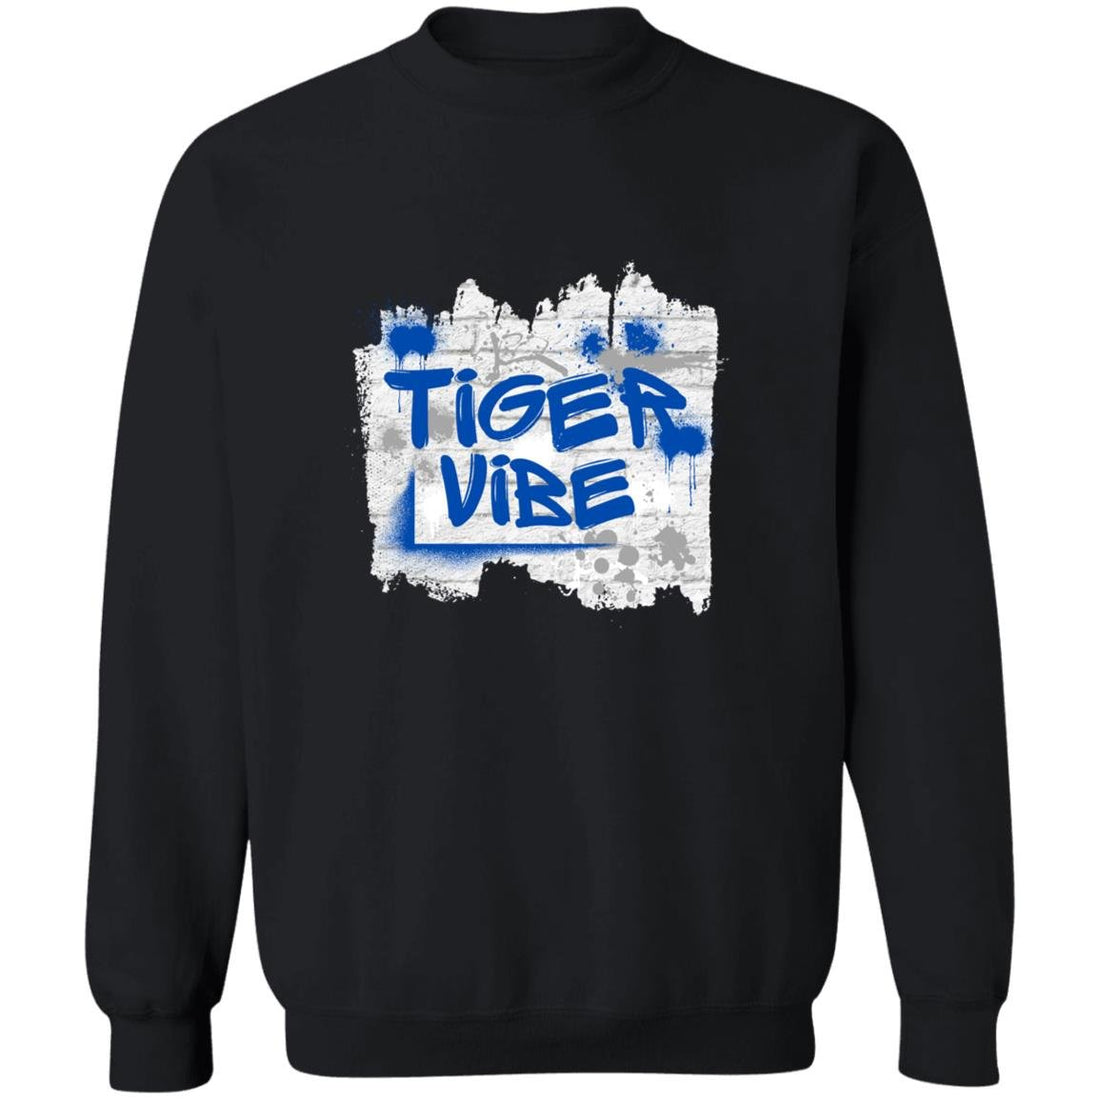 Tiger Vibe Crewneck Pullover Sweatshirt - Sweatshirts - Positively Sassy - Tiger Vibe Crewneck Pullover Sweatshirt